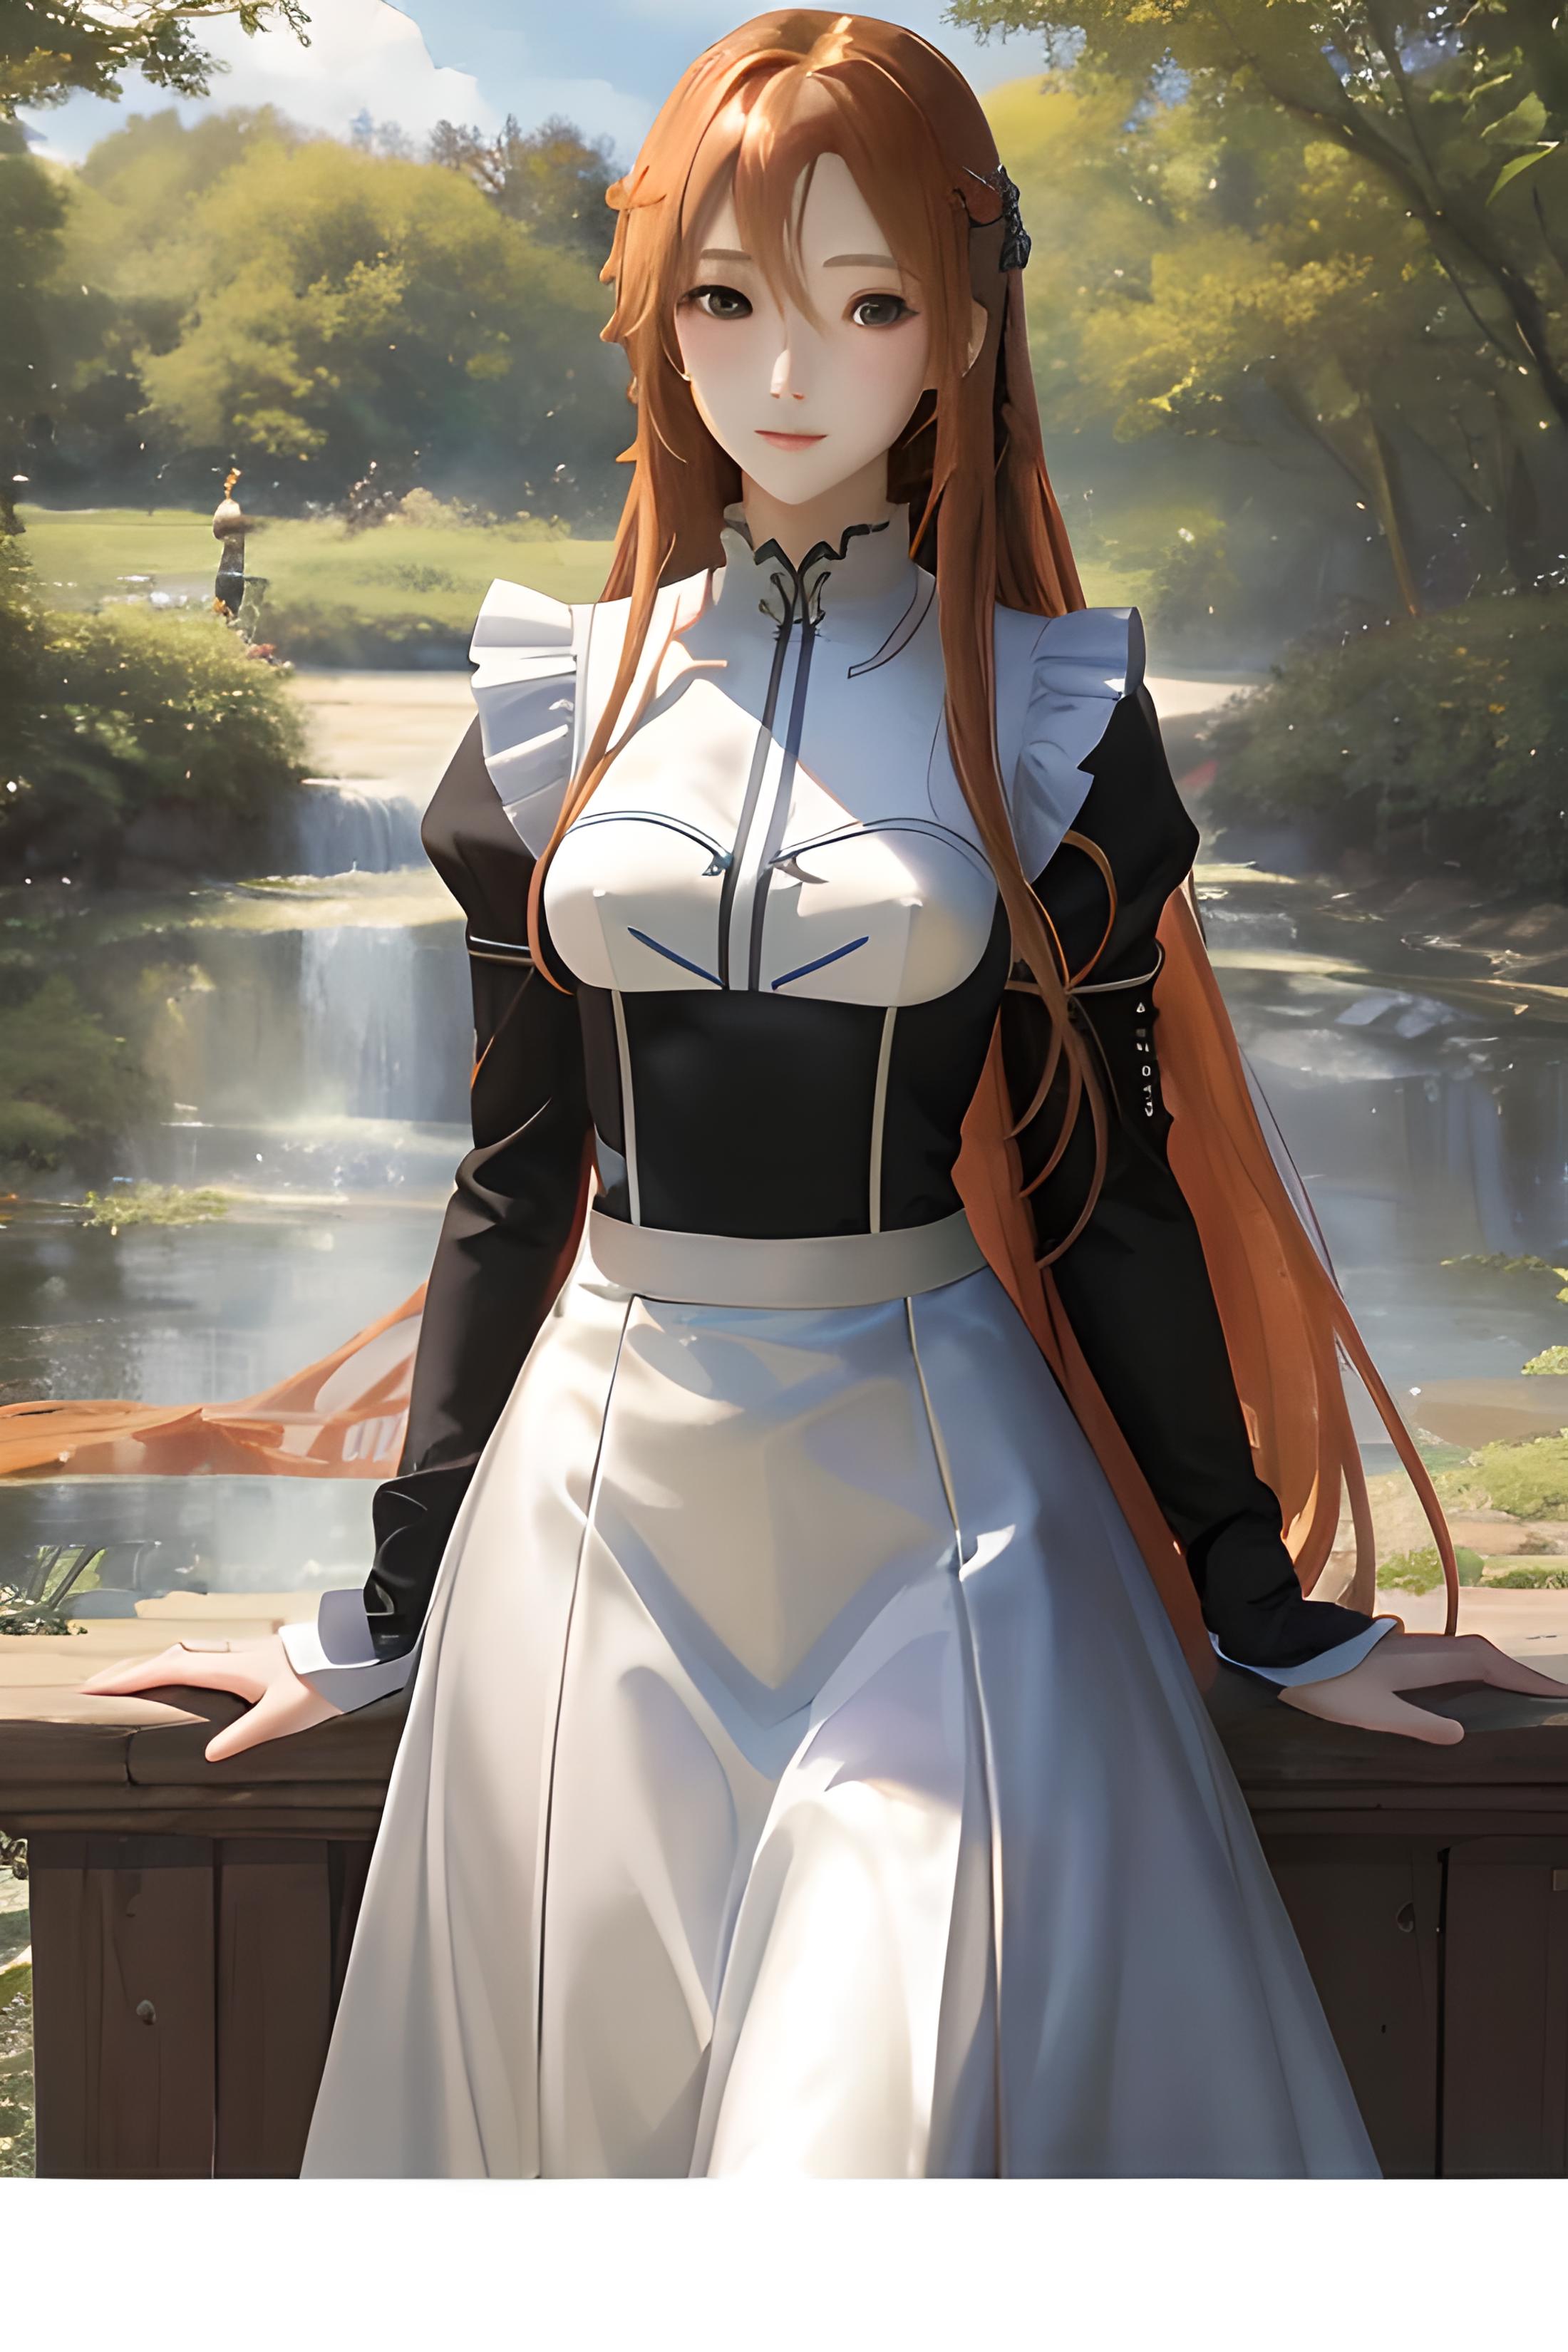 Asuna Yuuki - [SAO] - Sword Art Online - Anime image by sayurio